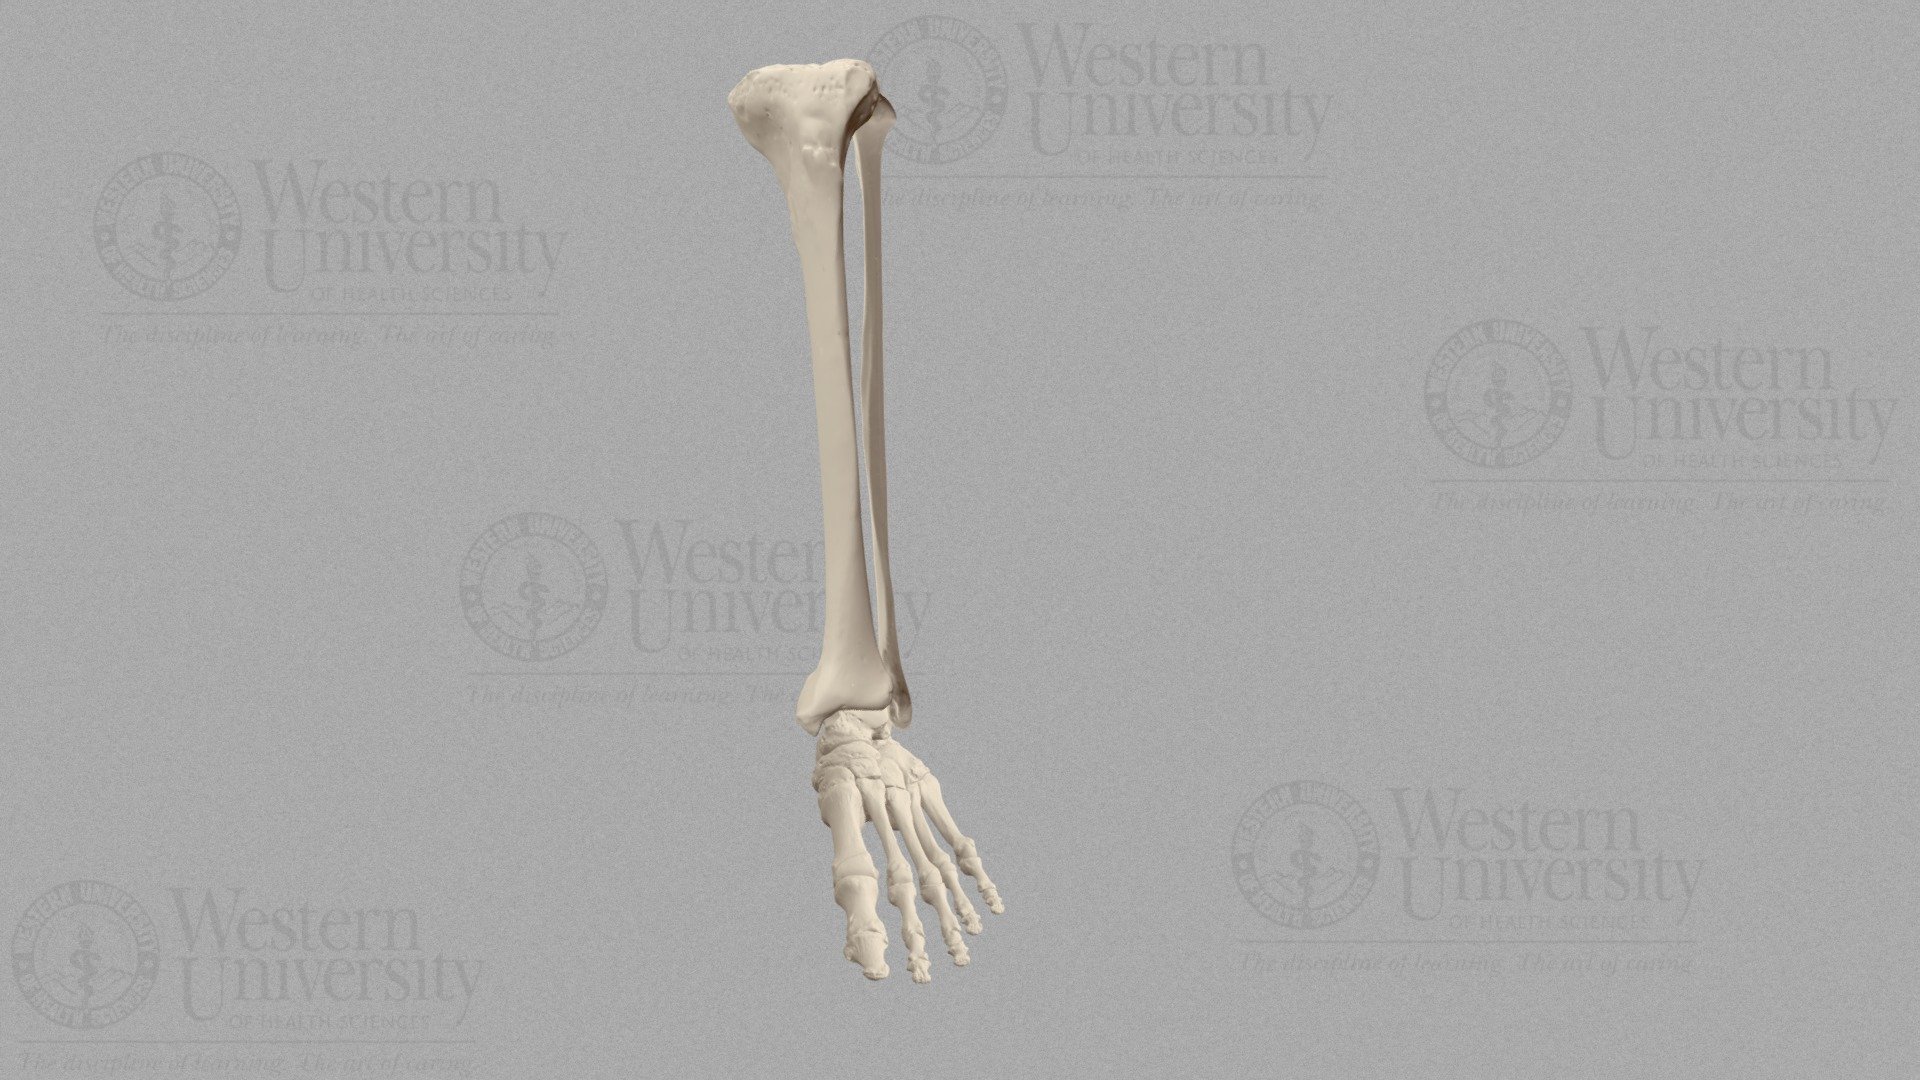 Lower Left Leg Bones.  

Scan of real bones by Gary A. Wisser at Western University of Health Sciences - Foot Bones Scan - Lower Left Leg - 3D model by WesternU3D 3d model